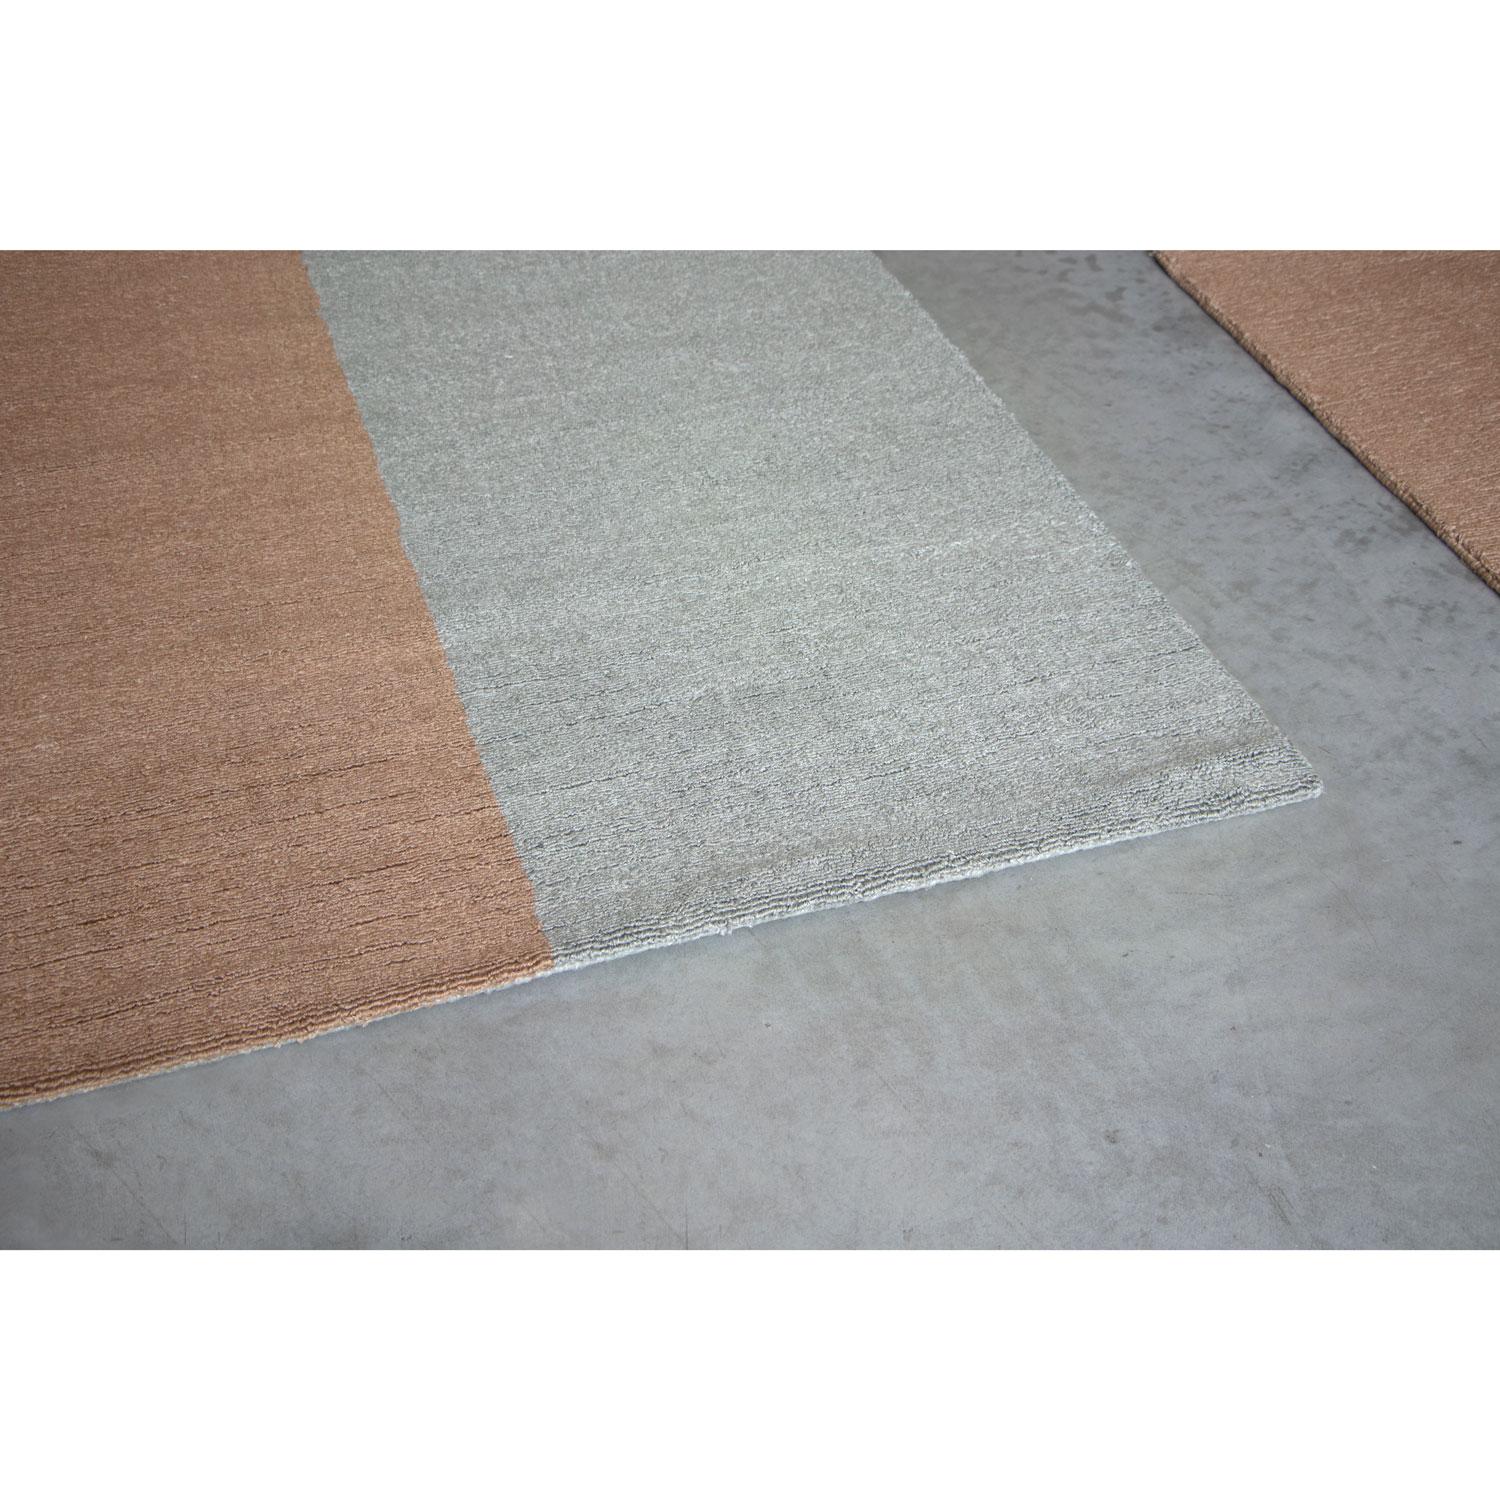 Modern 21st Cent Neutral Tones Natural Linen Rug by Deanna Comellini 150x250cm For Sale